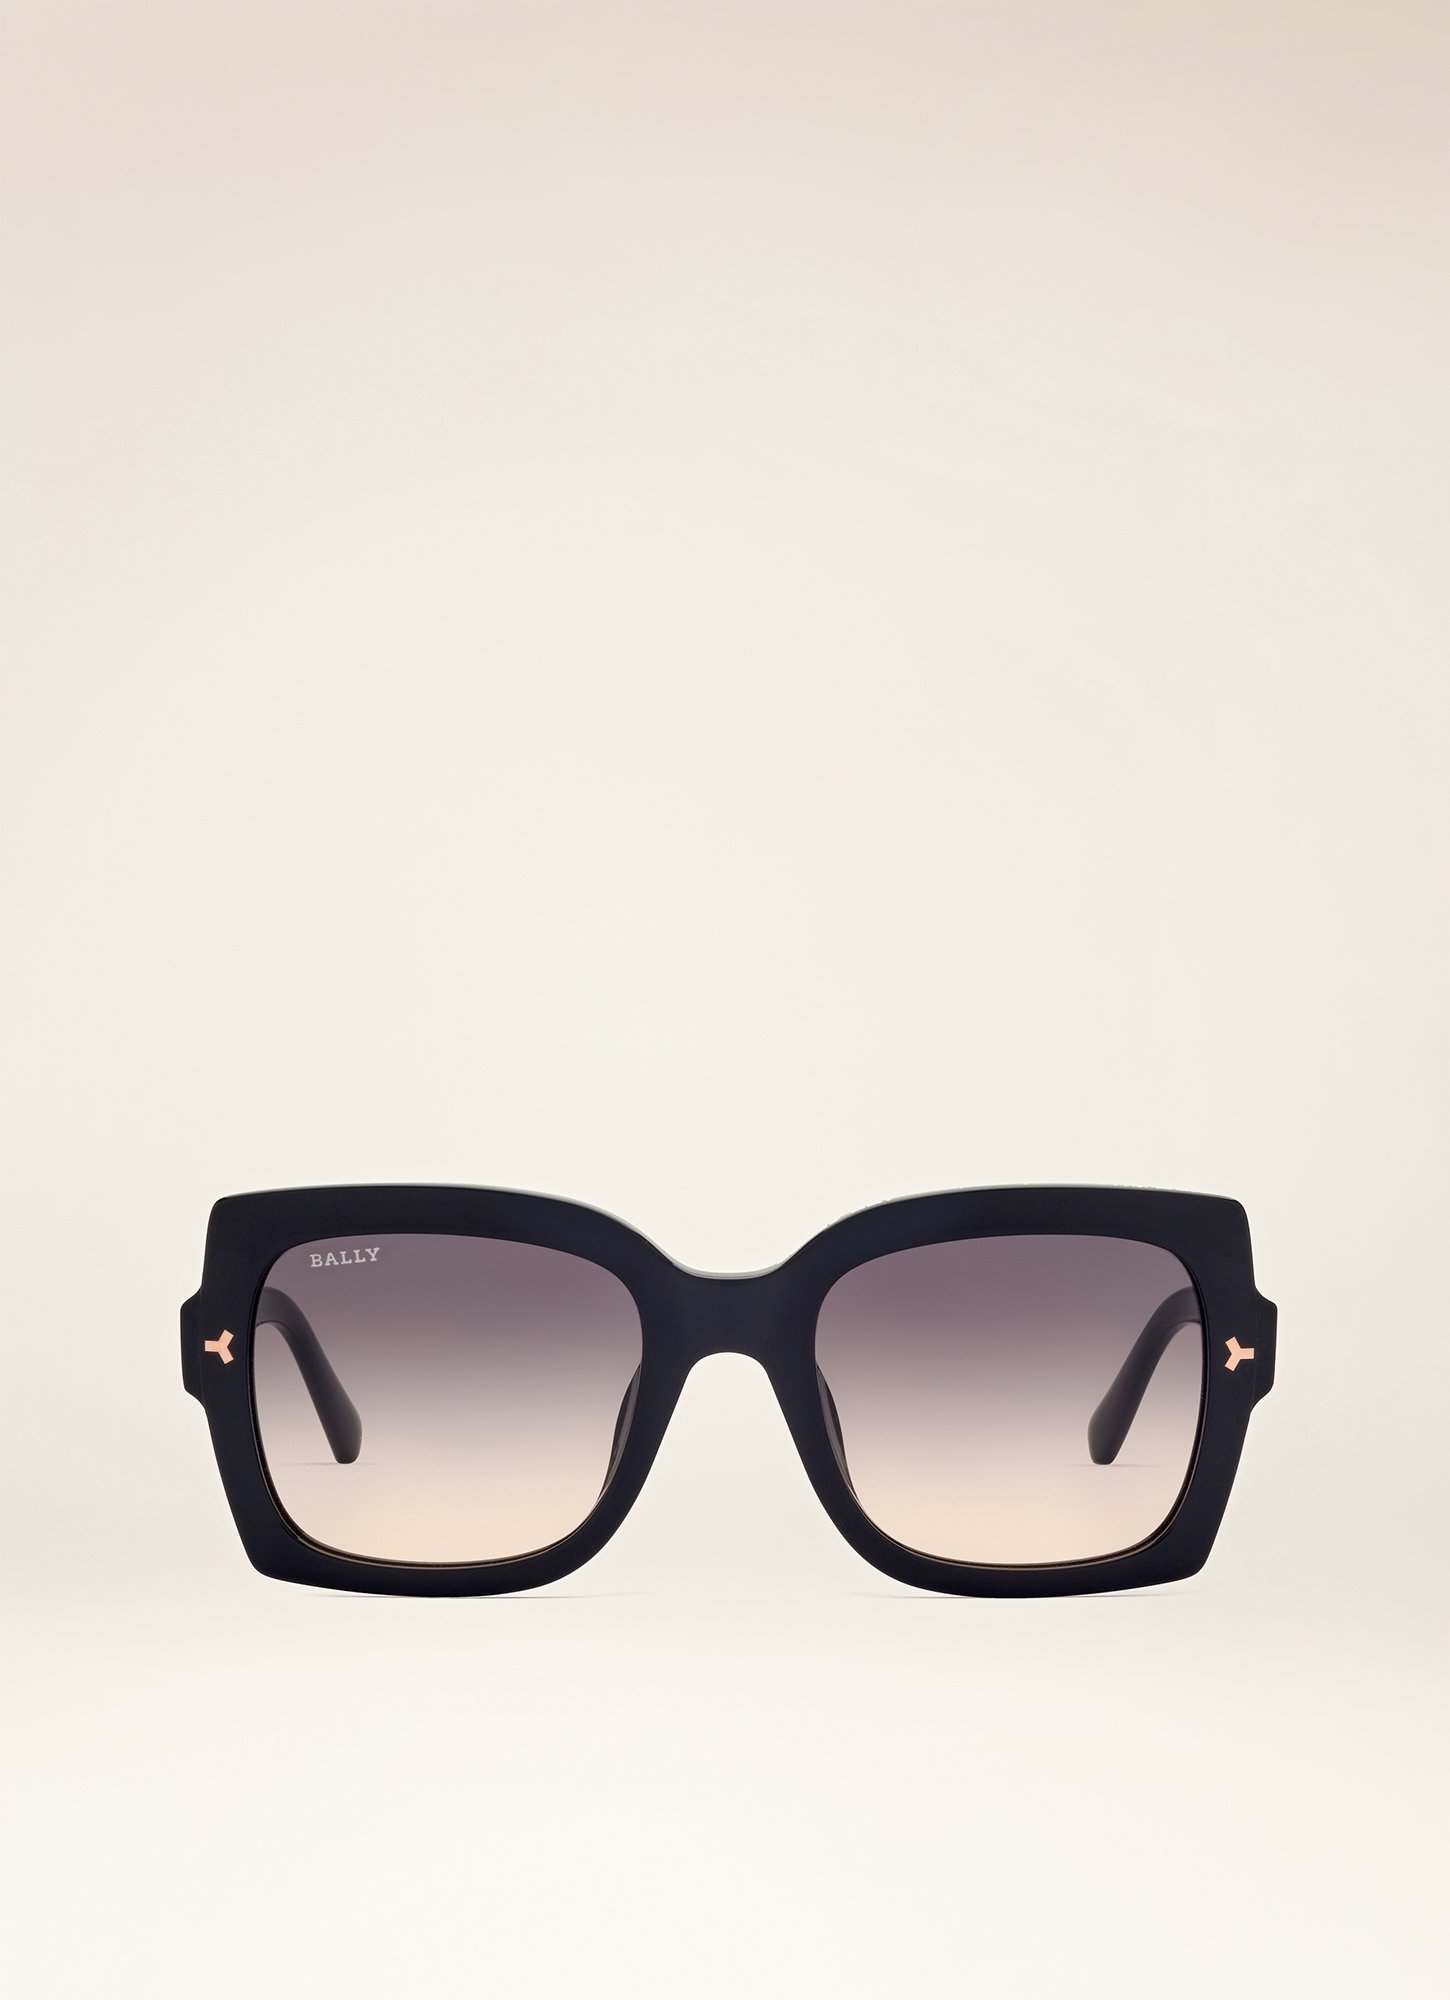 Bally sunglasses glasses sonnenbrille lunettes occhiali exclusive new box 